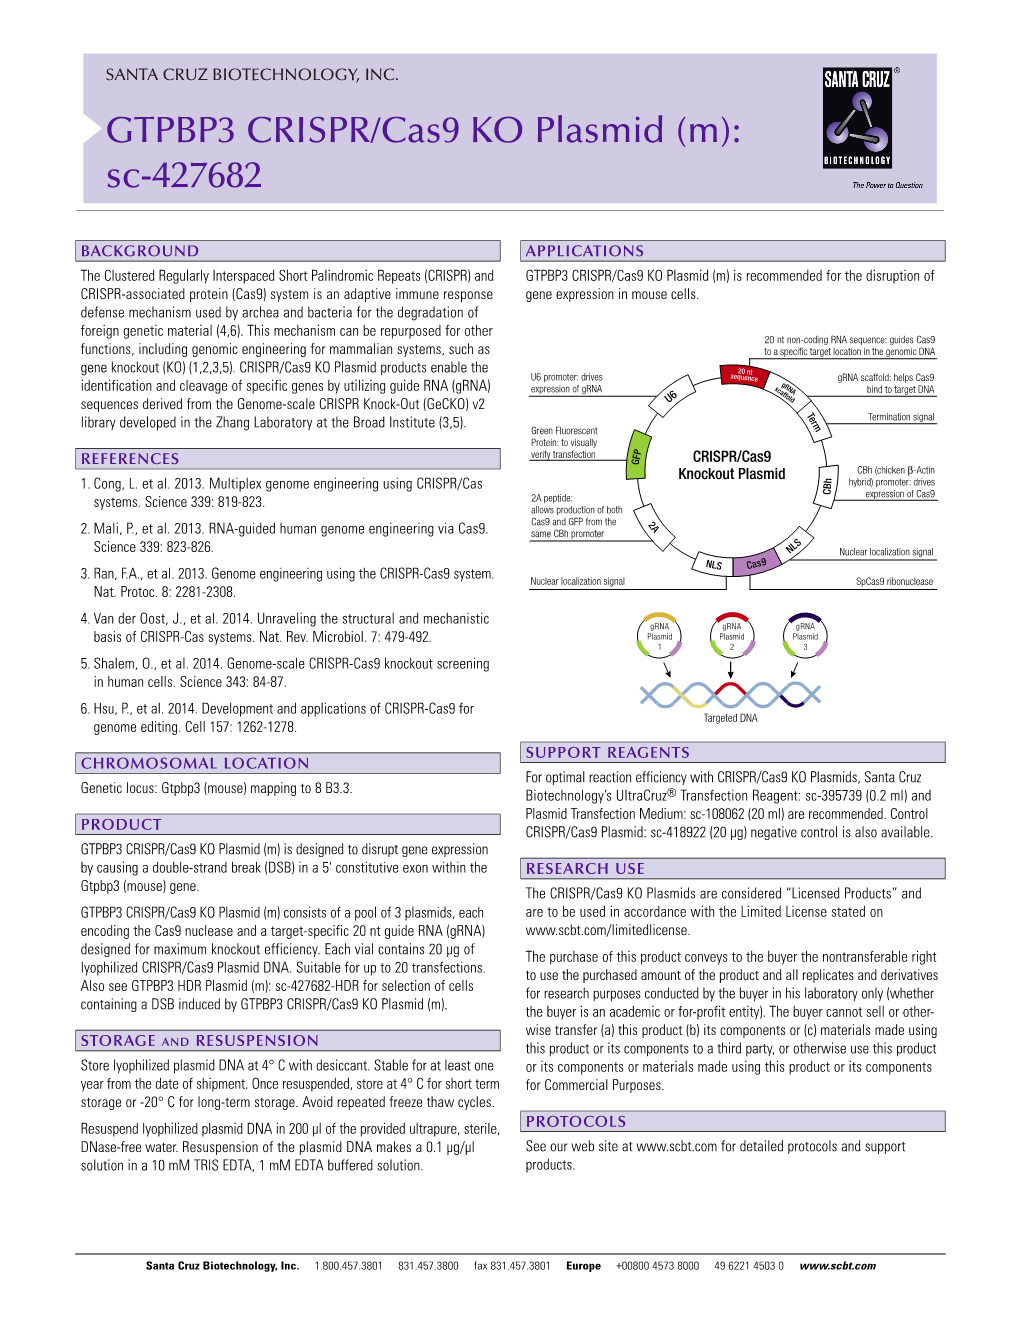 GTPBP3 CRISPR/Cas9 KO Plasmid (M): Sc-427682